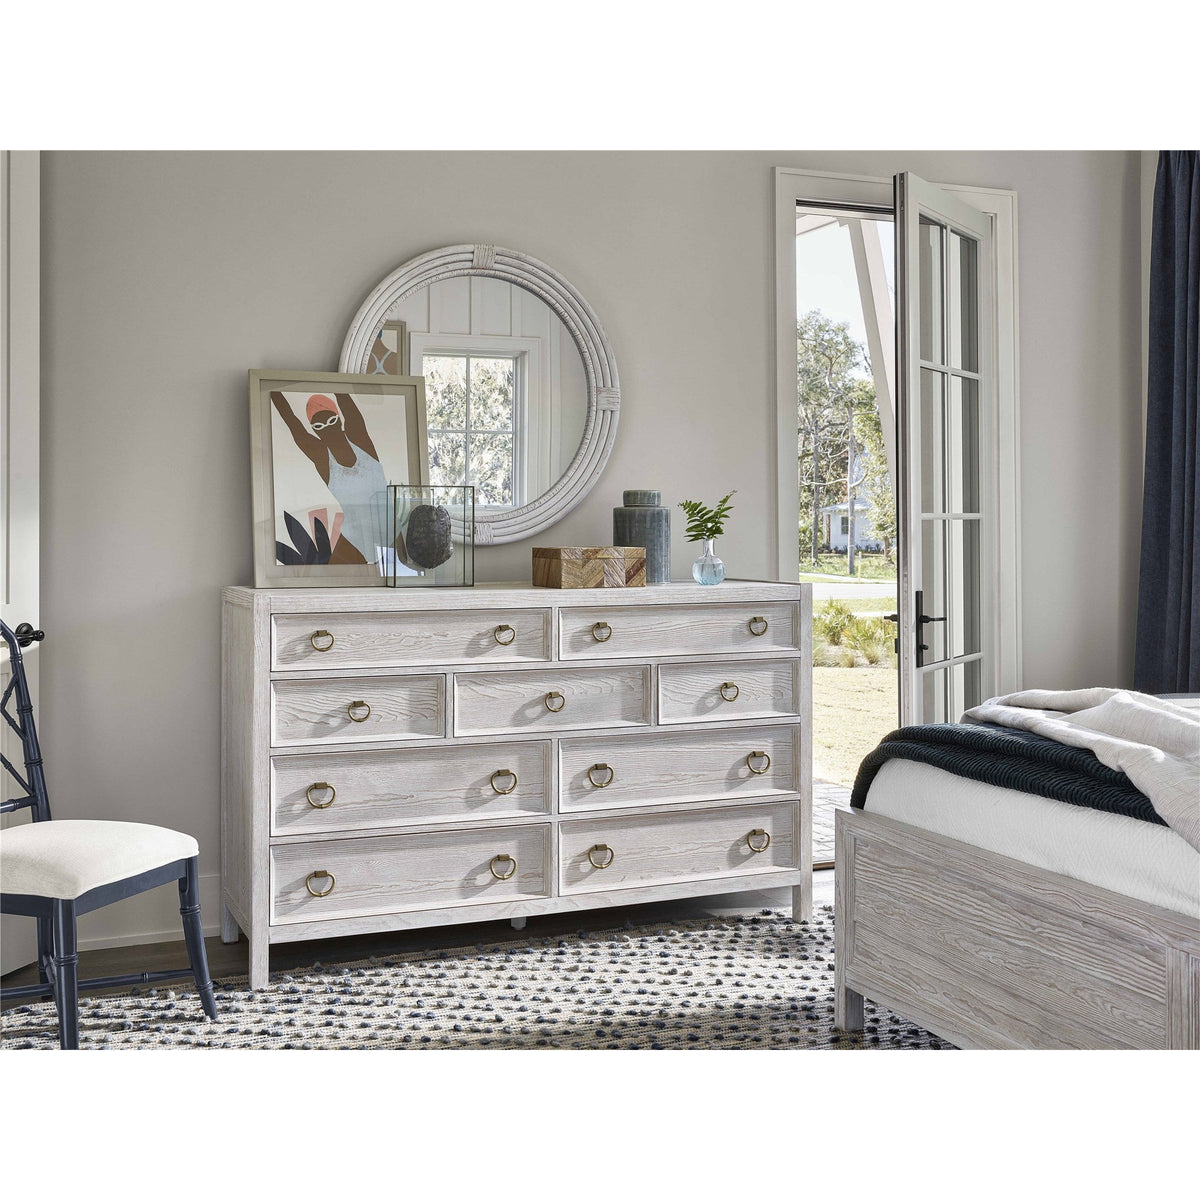 Getaway Round Mirror - Be Bold Furniture